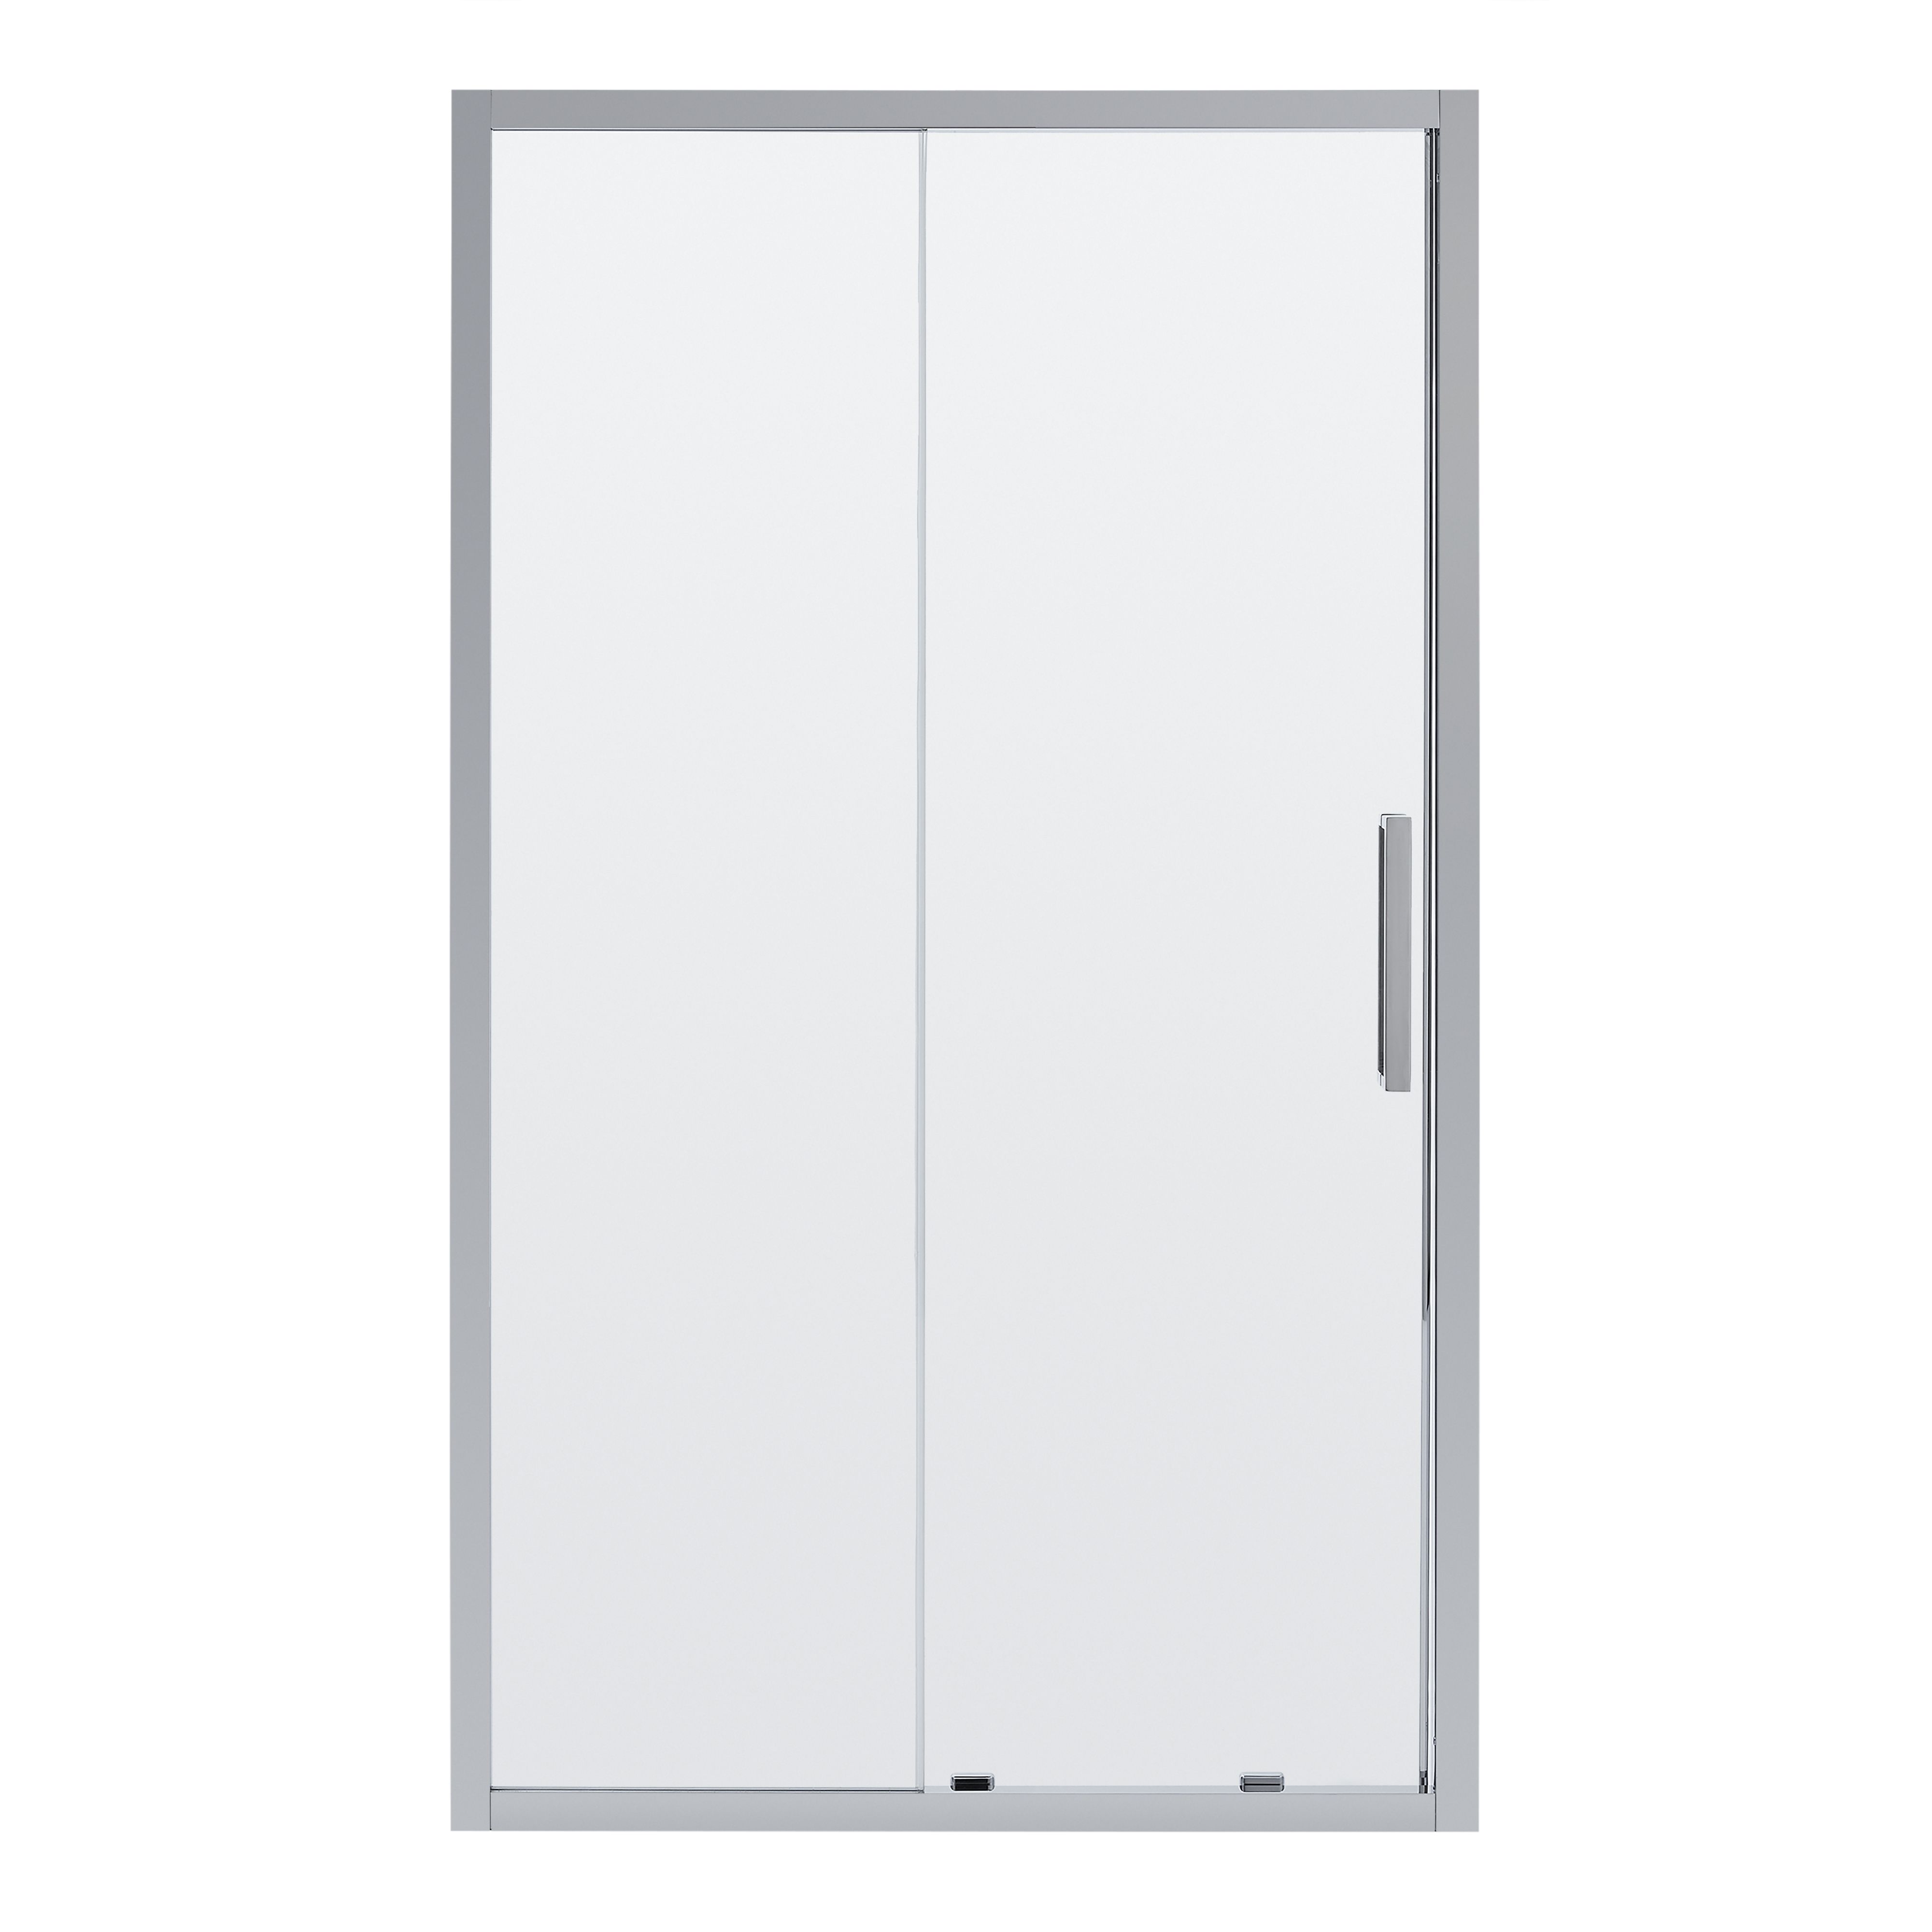 Cooke & Lewis Zilia Silver effect Clear No design Sliding Shower Door (H)200cm (W)120cm